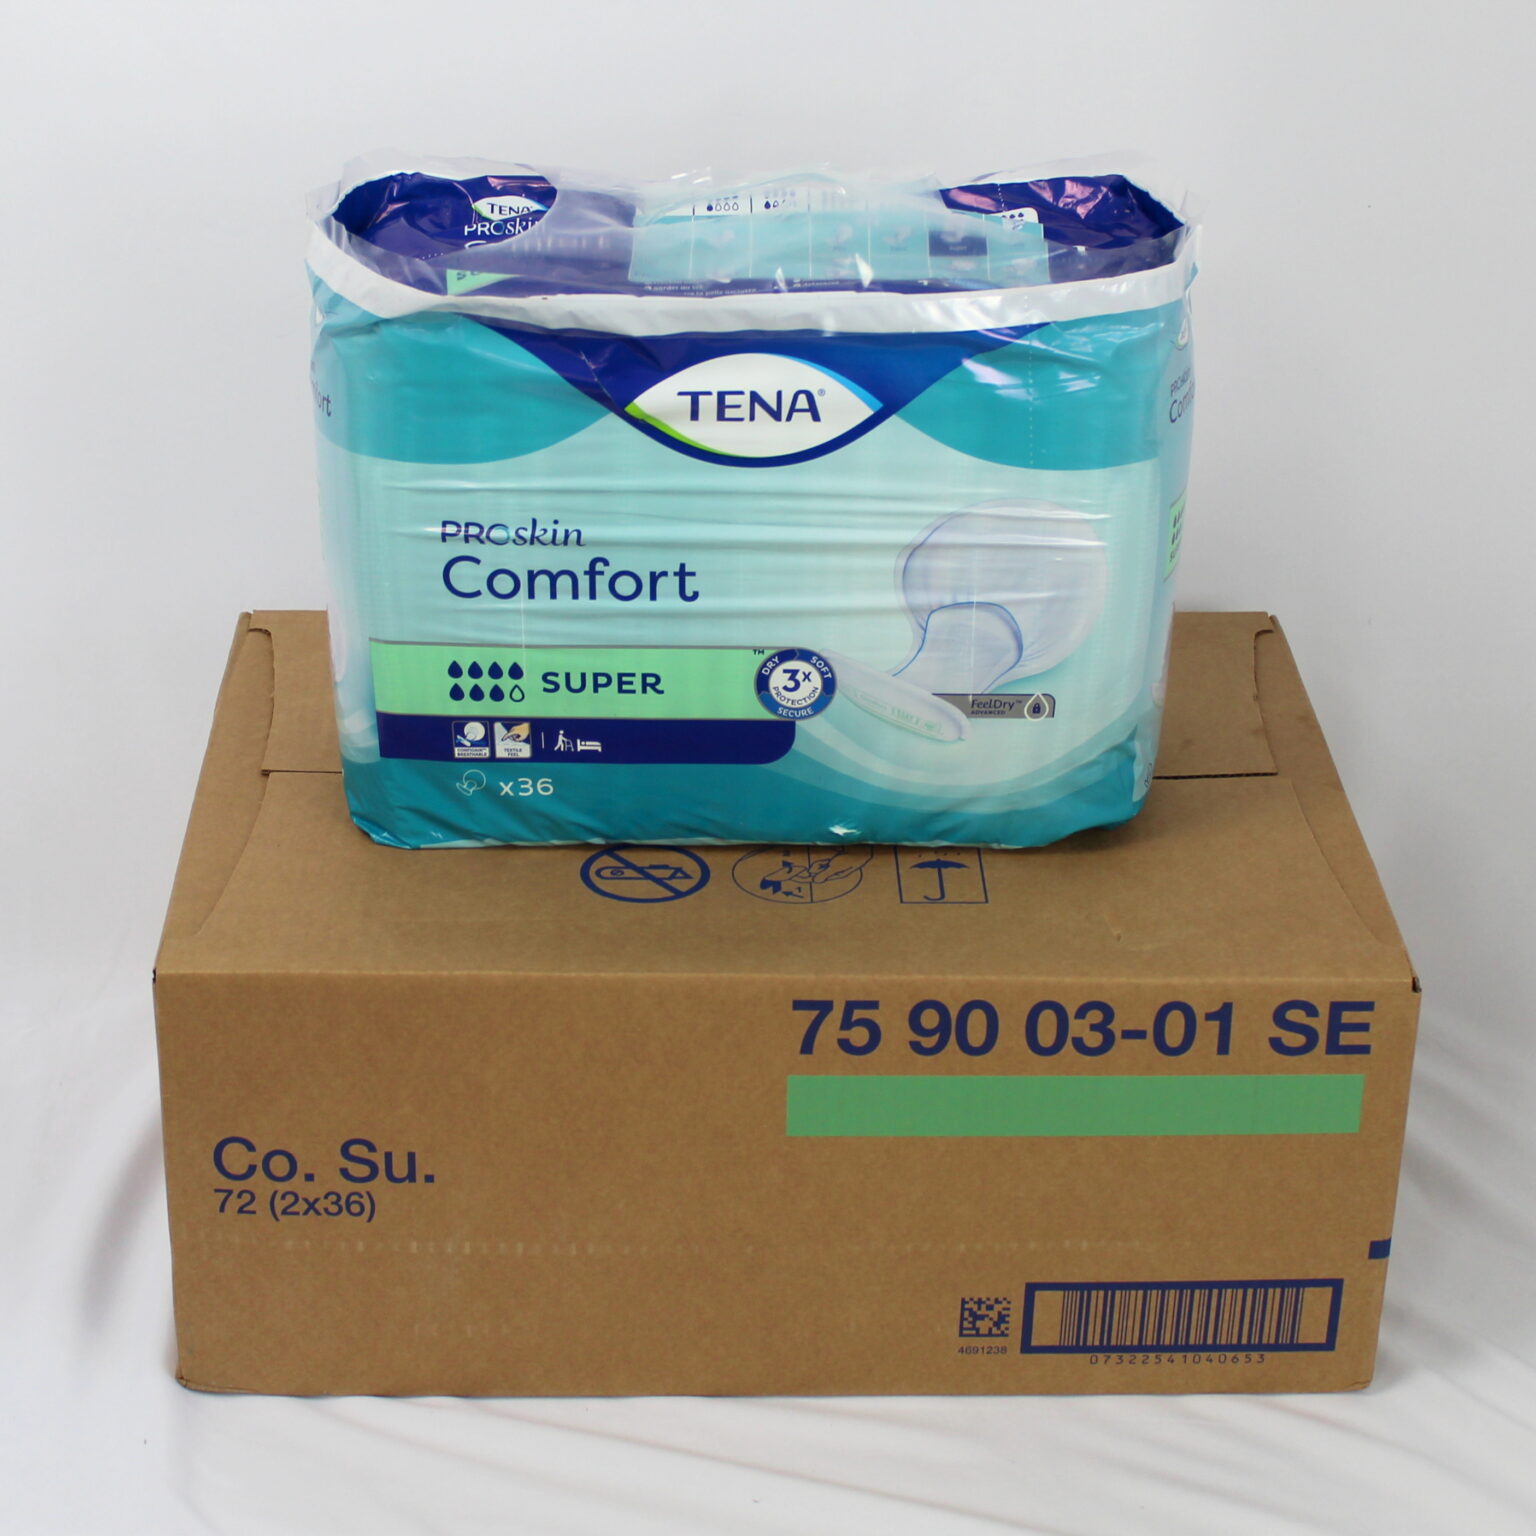 TENA Pro Skin Comfort - SUPER